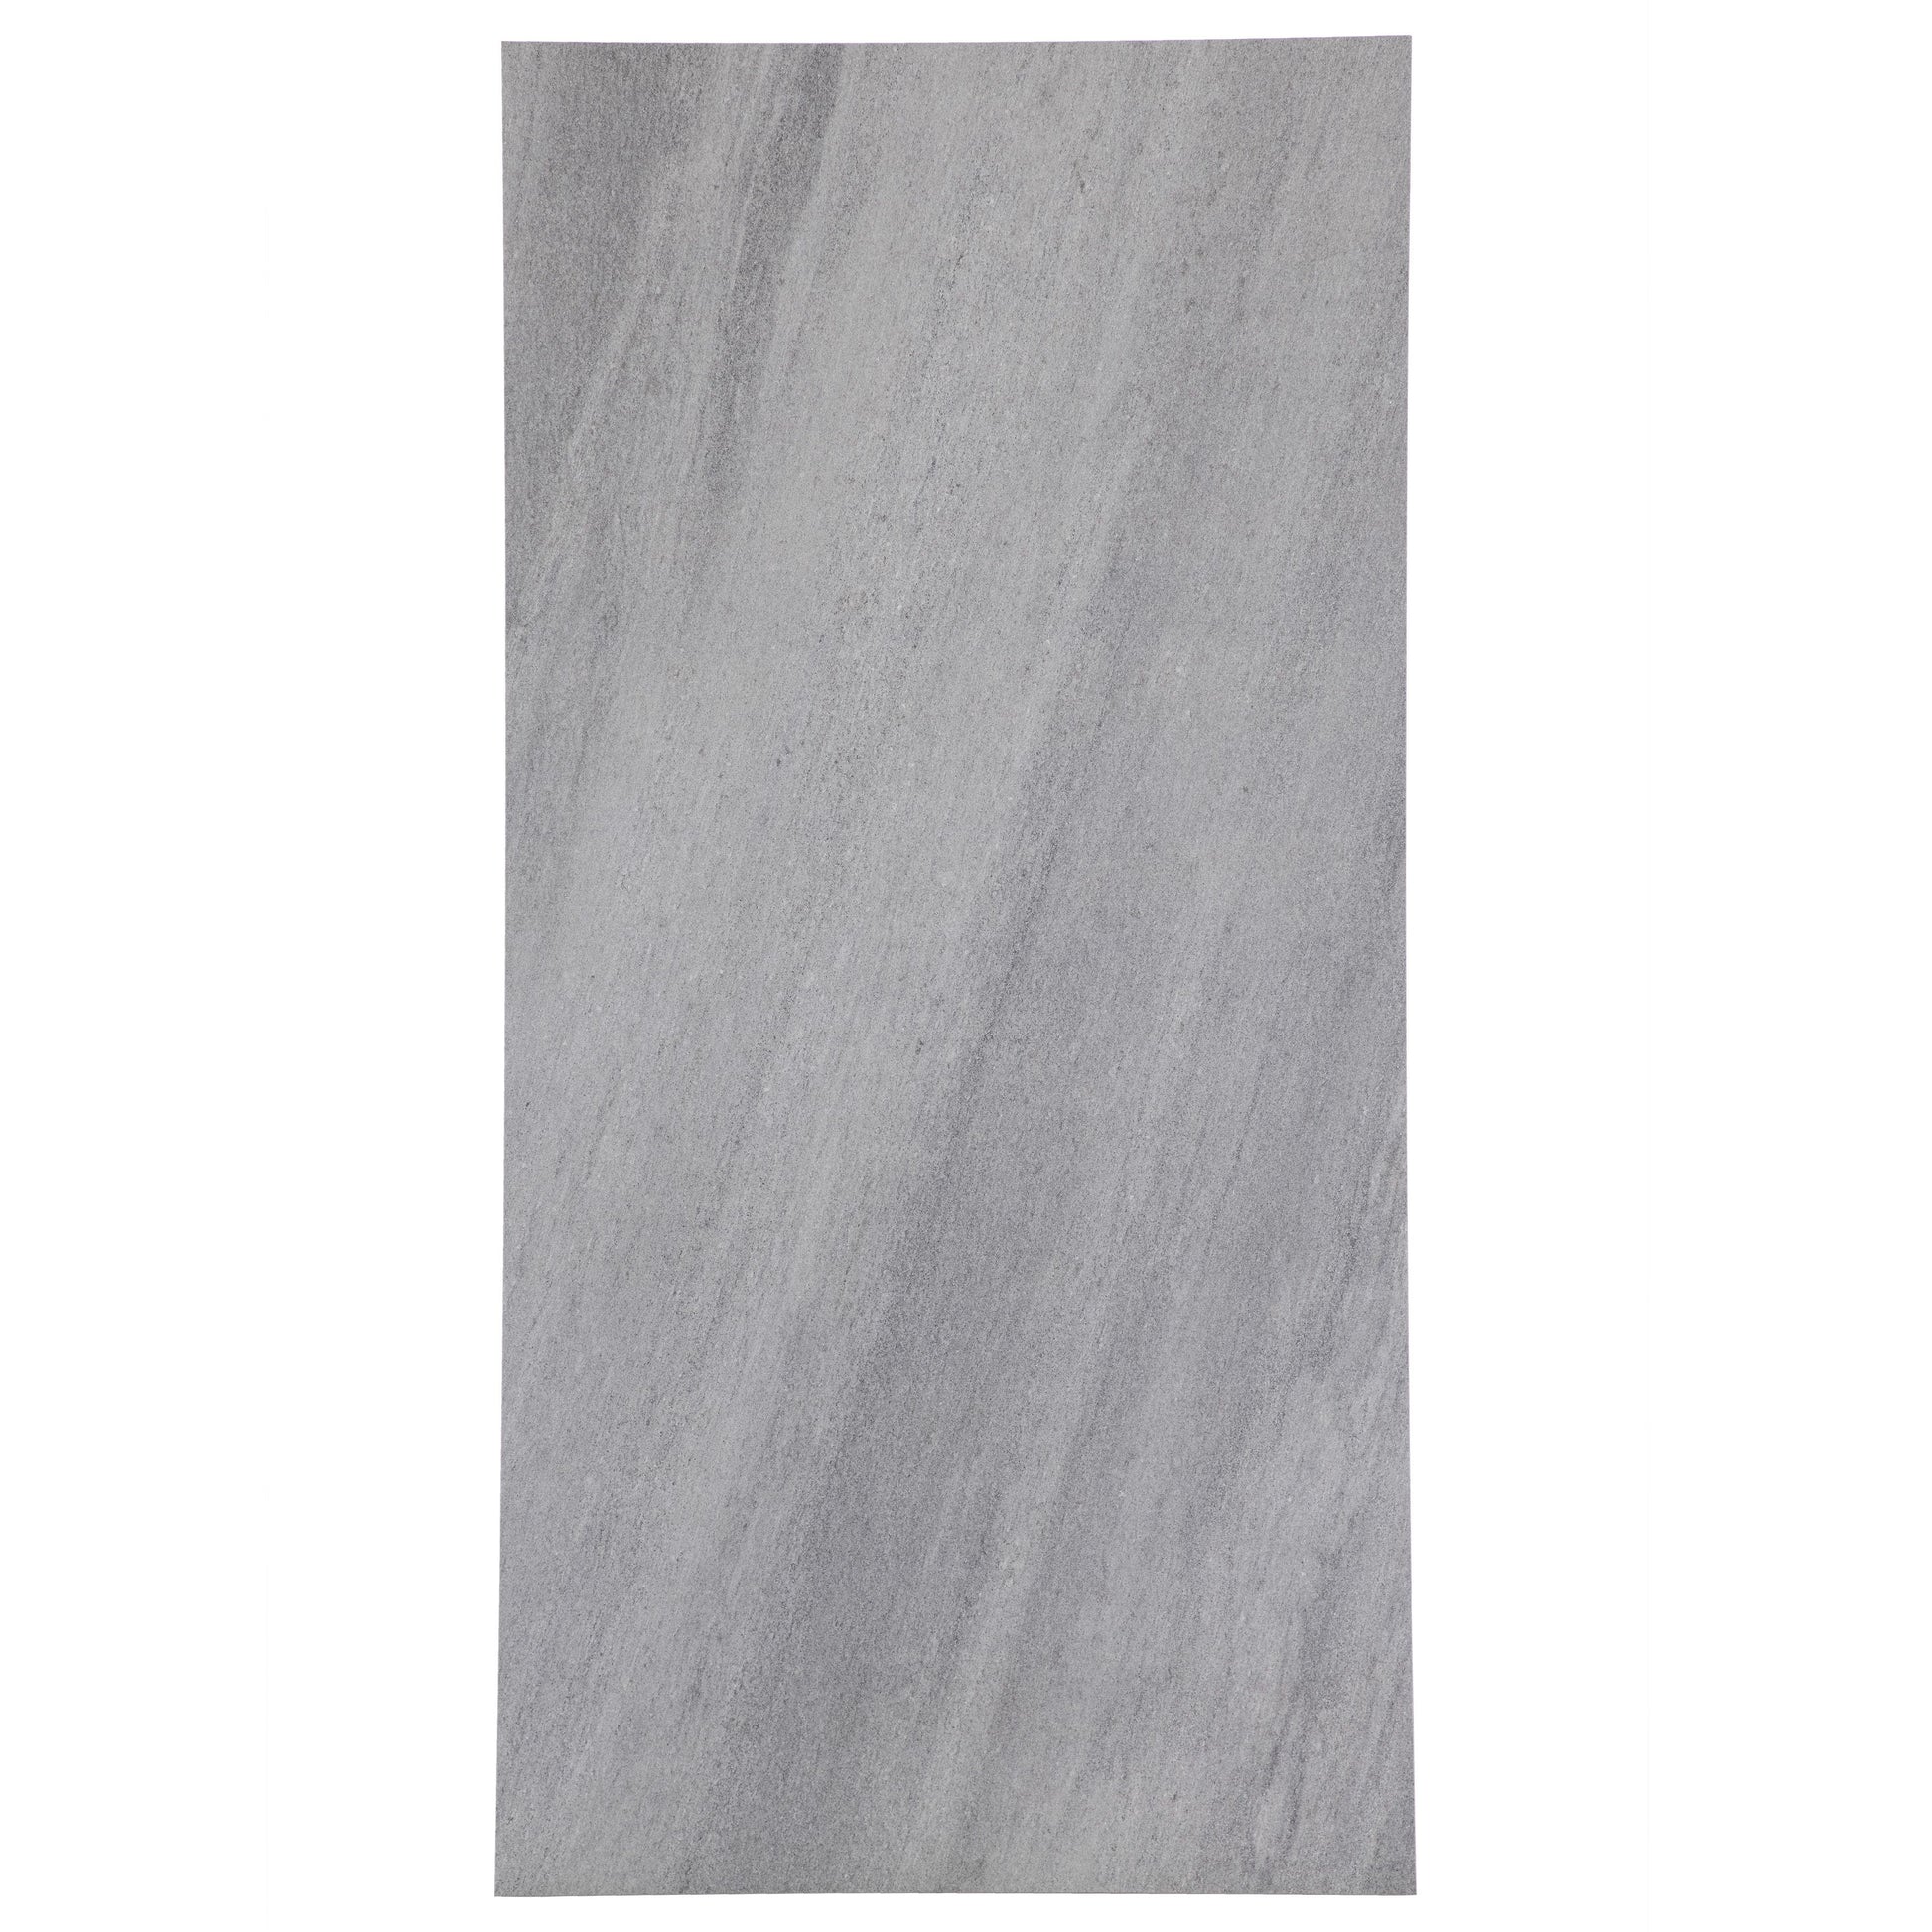 12x24 Quartzite Gray matte porcelain tile (made in USA) – Industry Tile